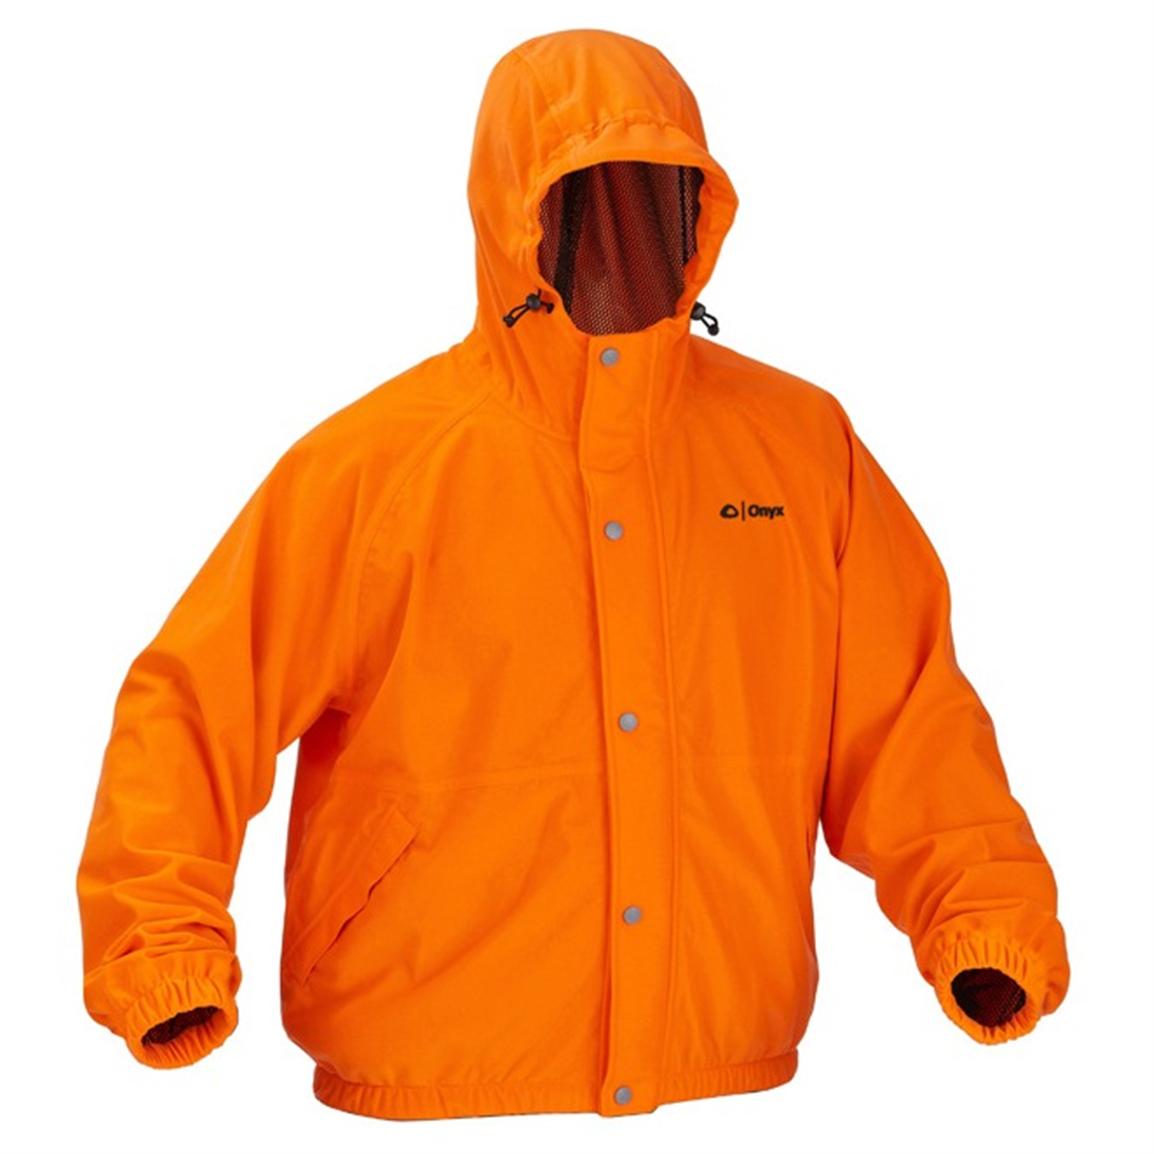 Onyx® Silent Pursuit Jacket - 207316, Camo Jackets at Sportsman's Guide